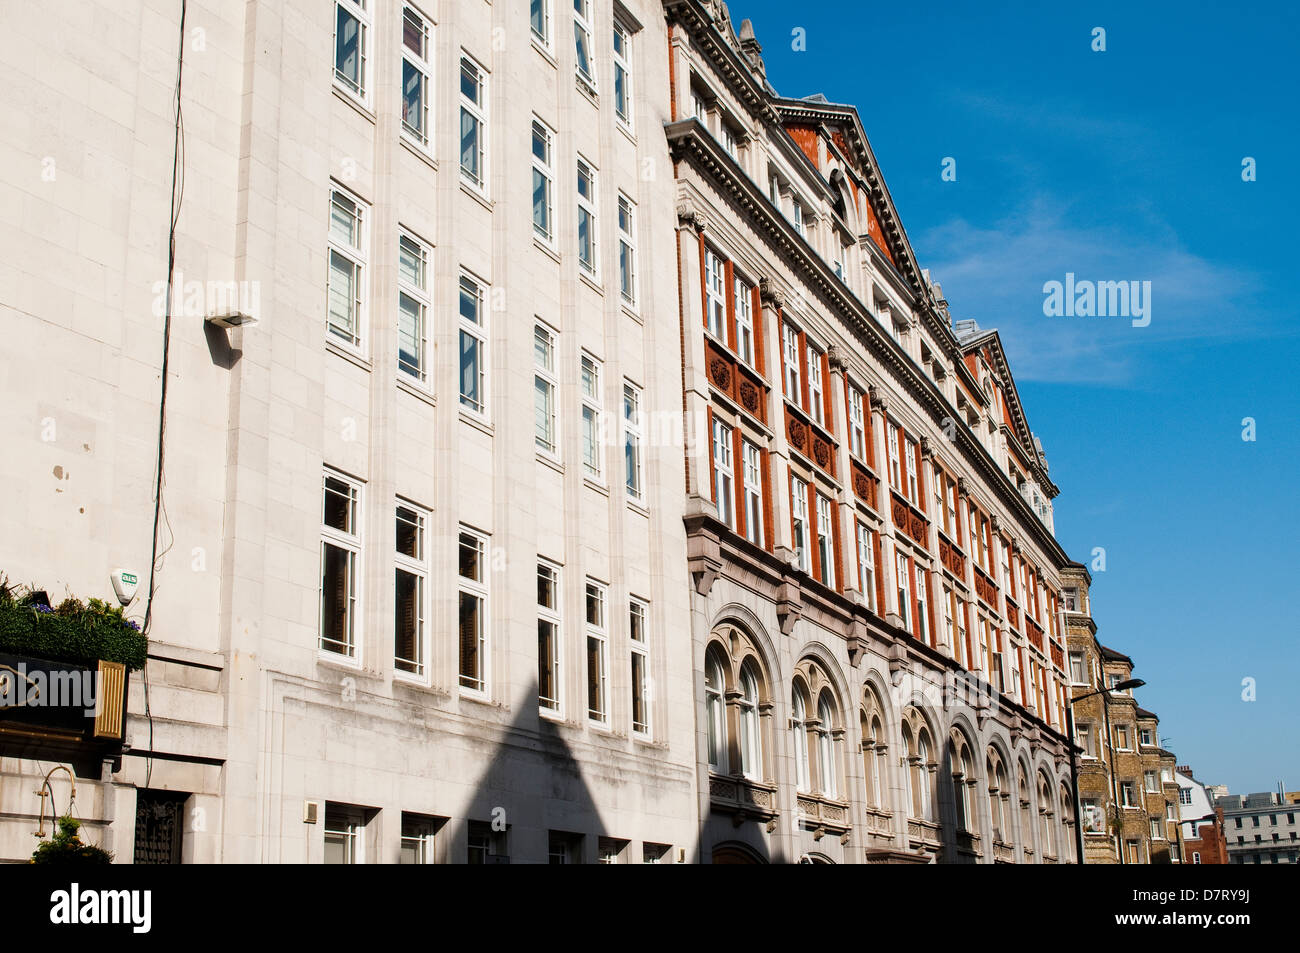 Houses in Drury Lane, Covent Garden, London, UK Stock Photo